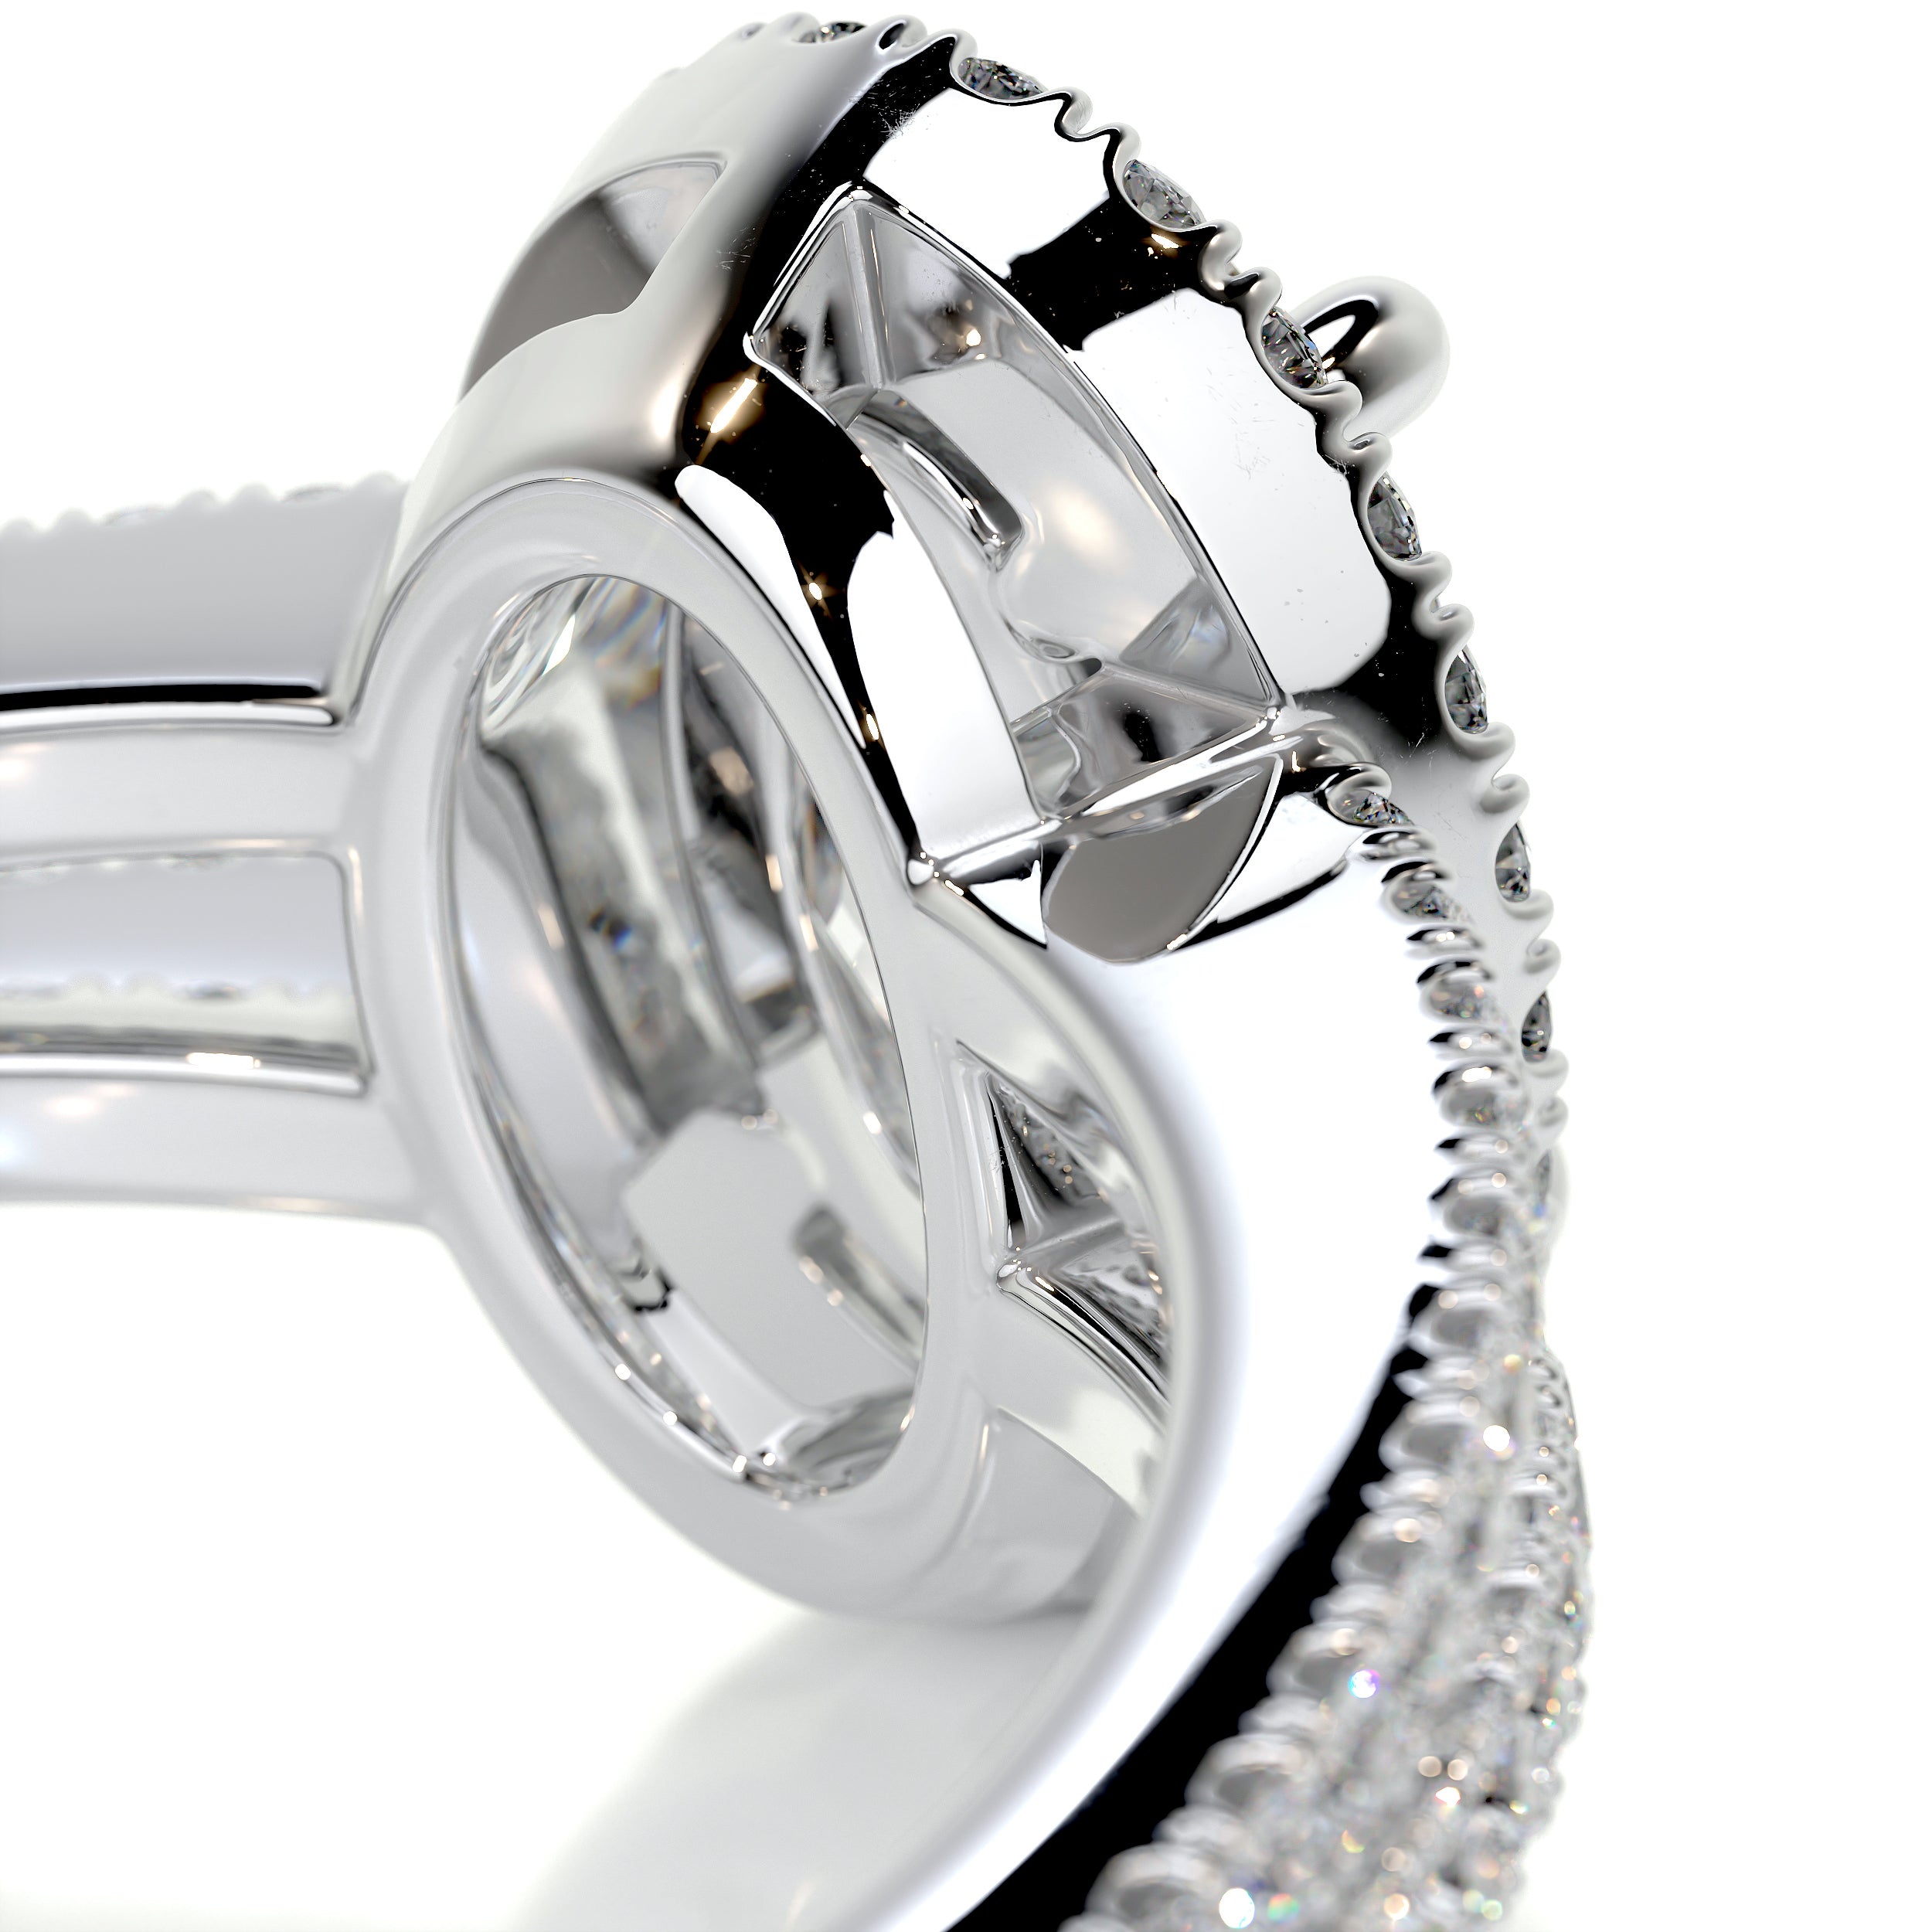 Brielle Diamond Engagement Ring -Platinum